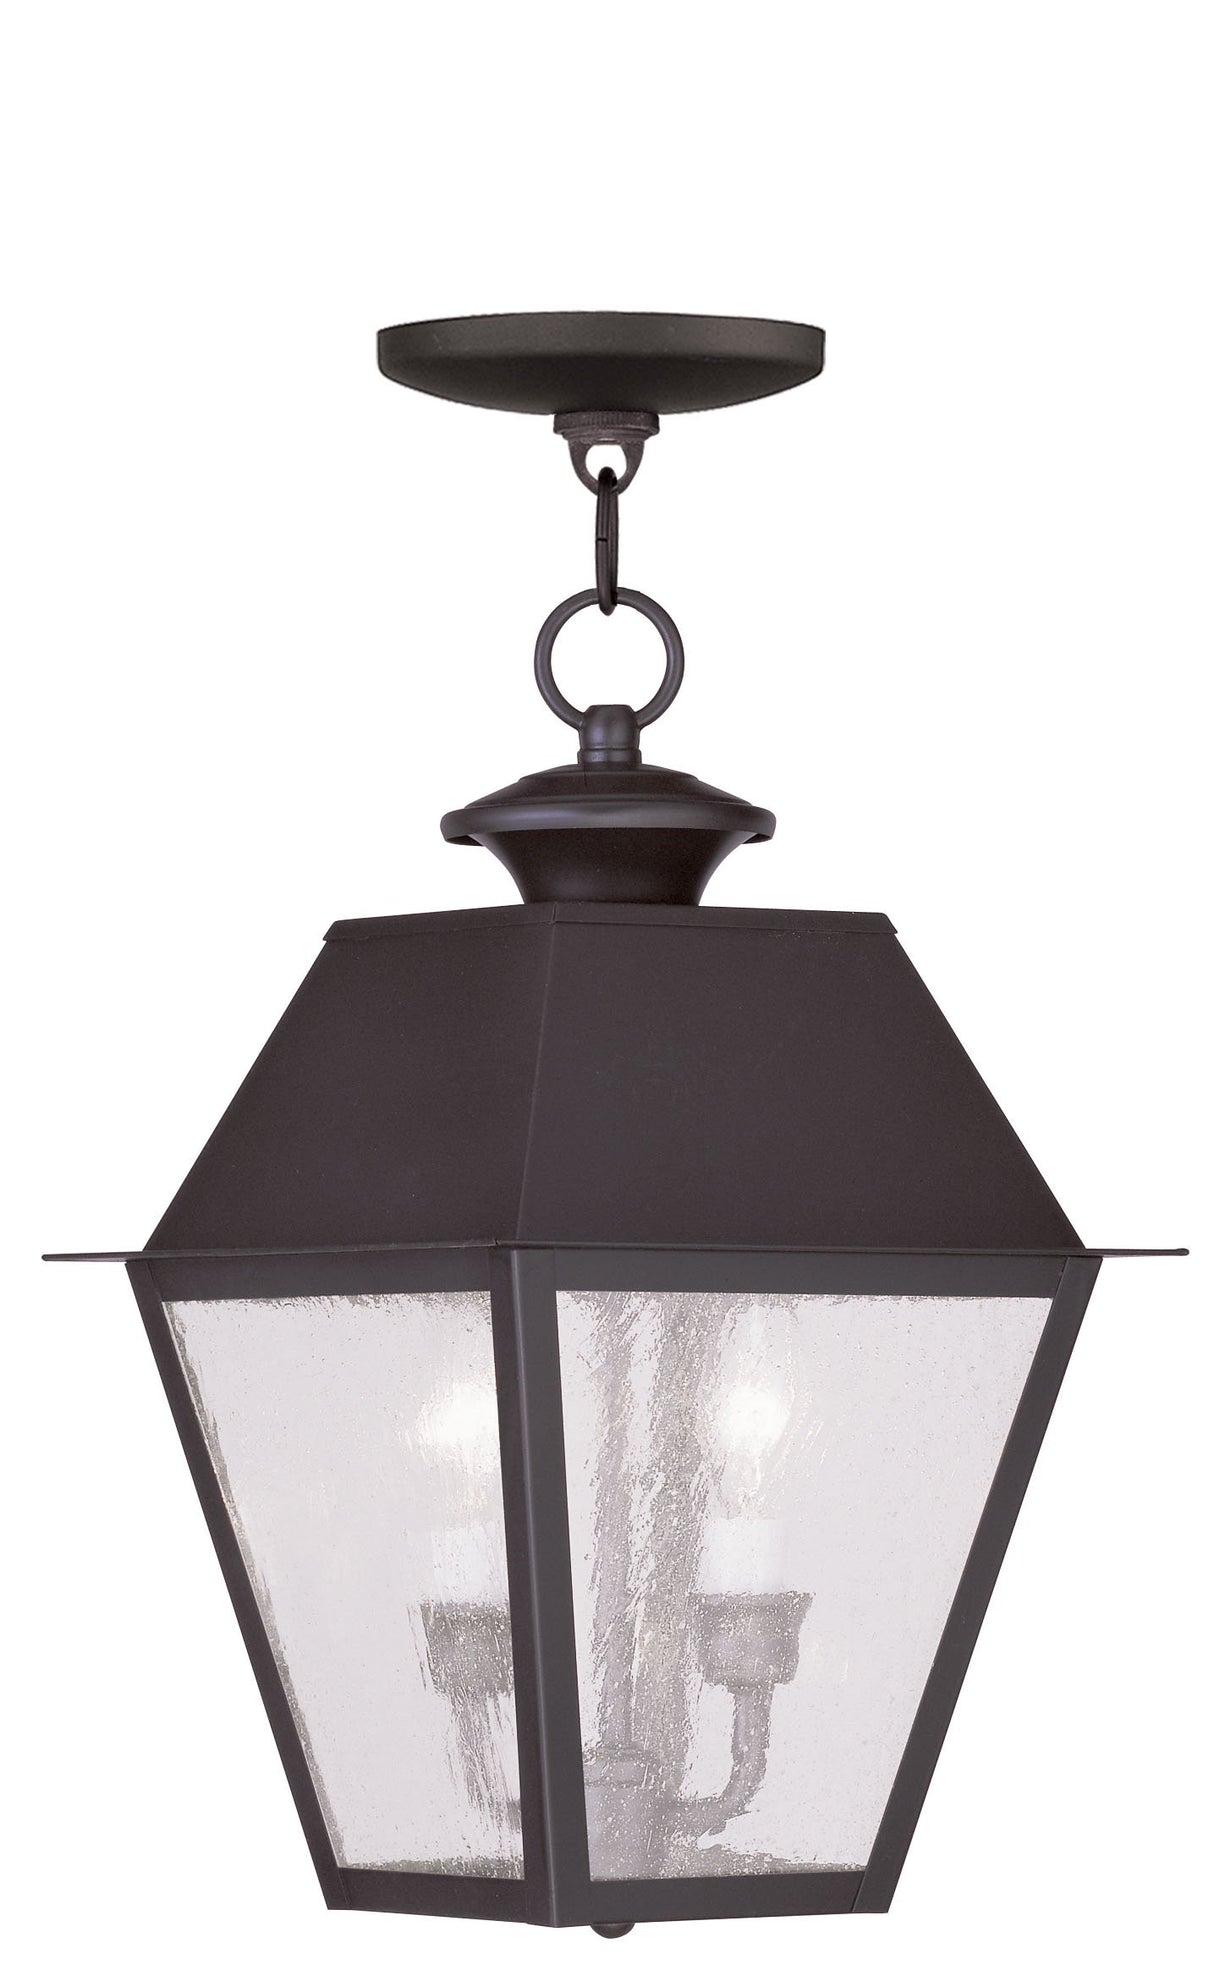 Livex Lighting 2167-07 Mansfield 2-Light Outdoor Hanging Lantern, Bronze